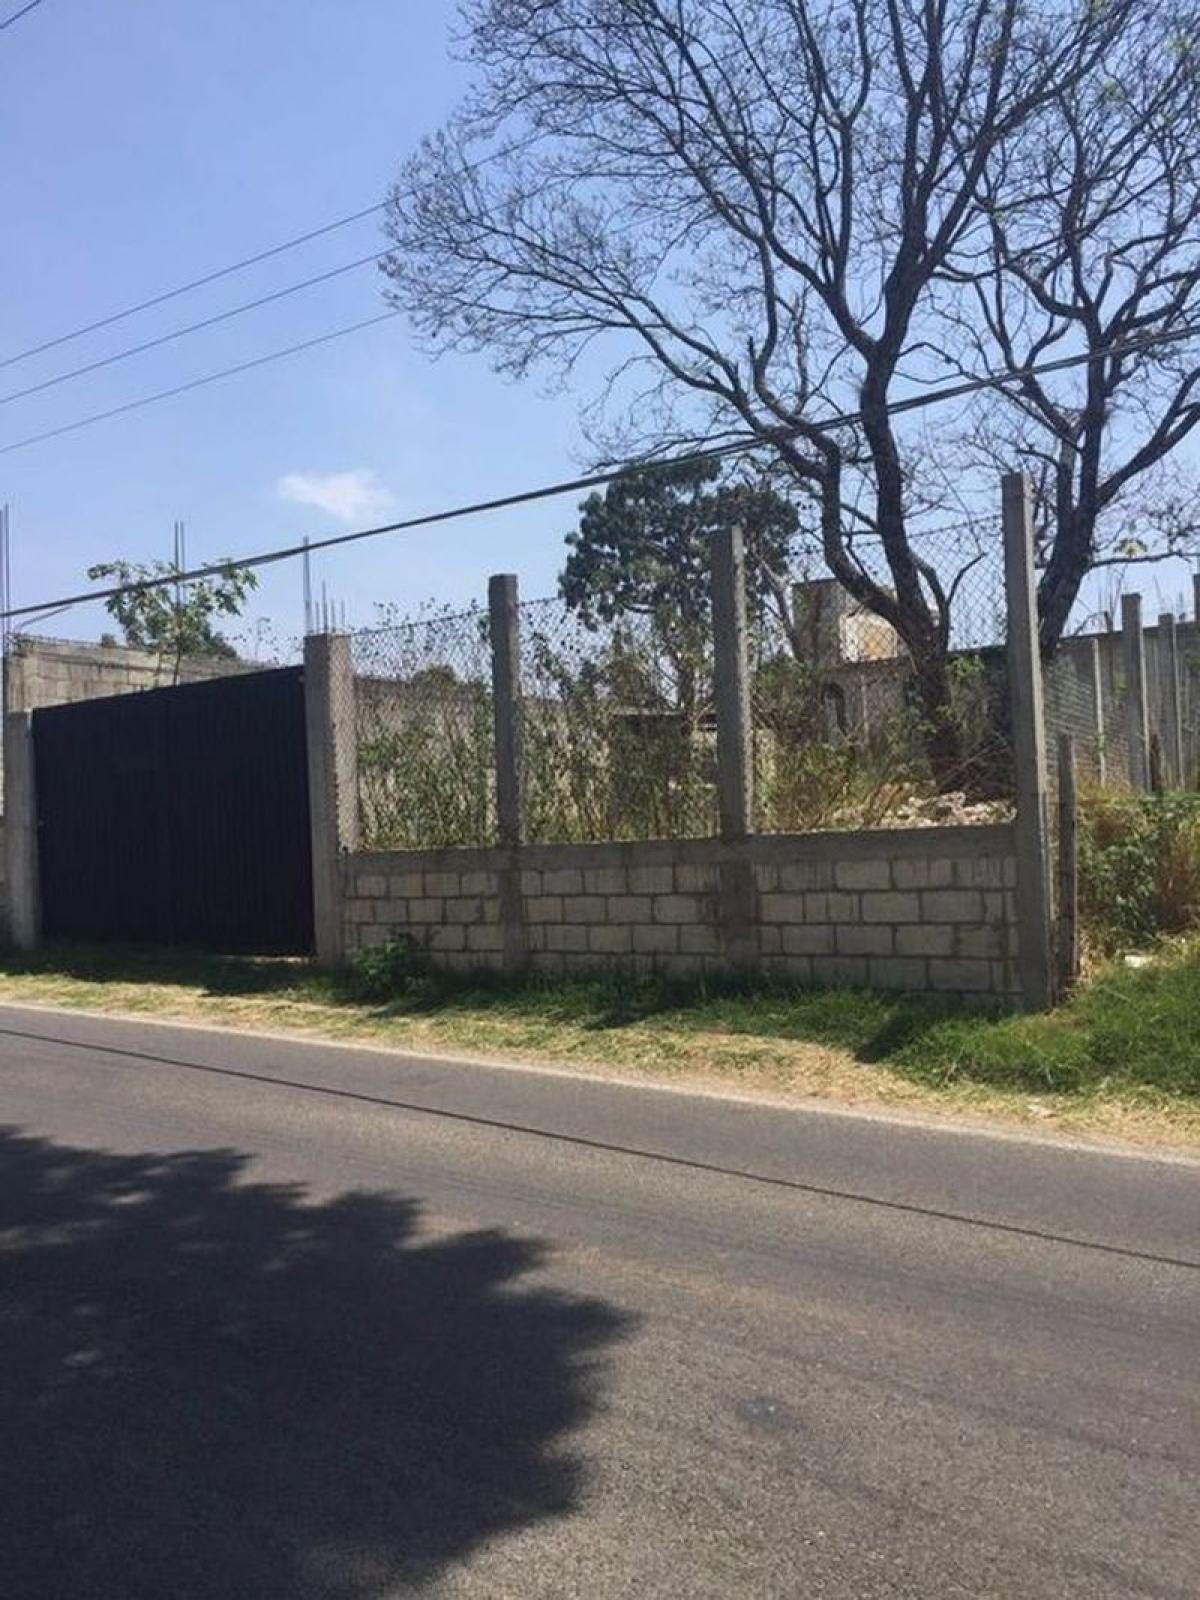 Picture of Residential Land For Sale in Comitan De Dominguez, Chiapas, Mexico